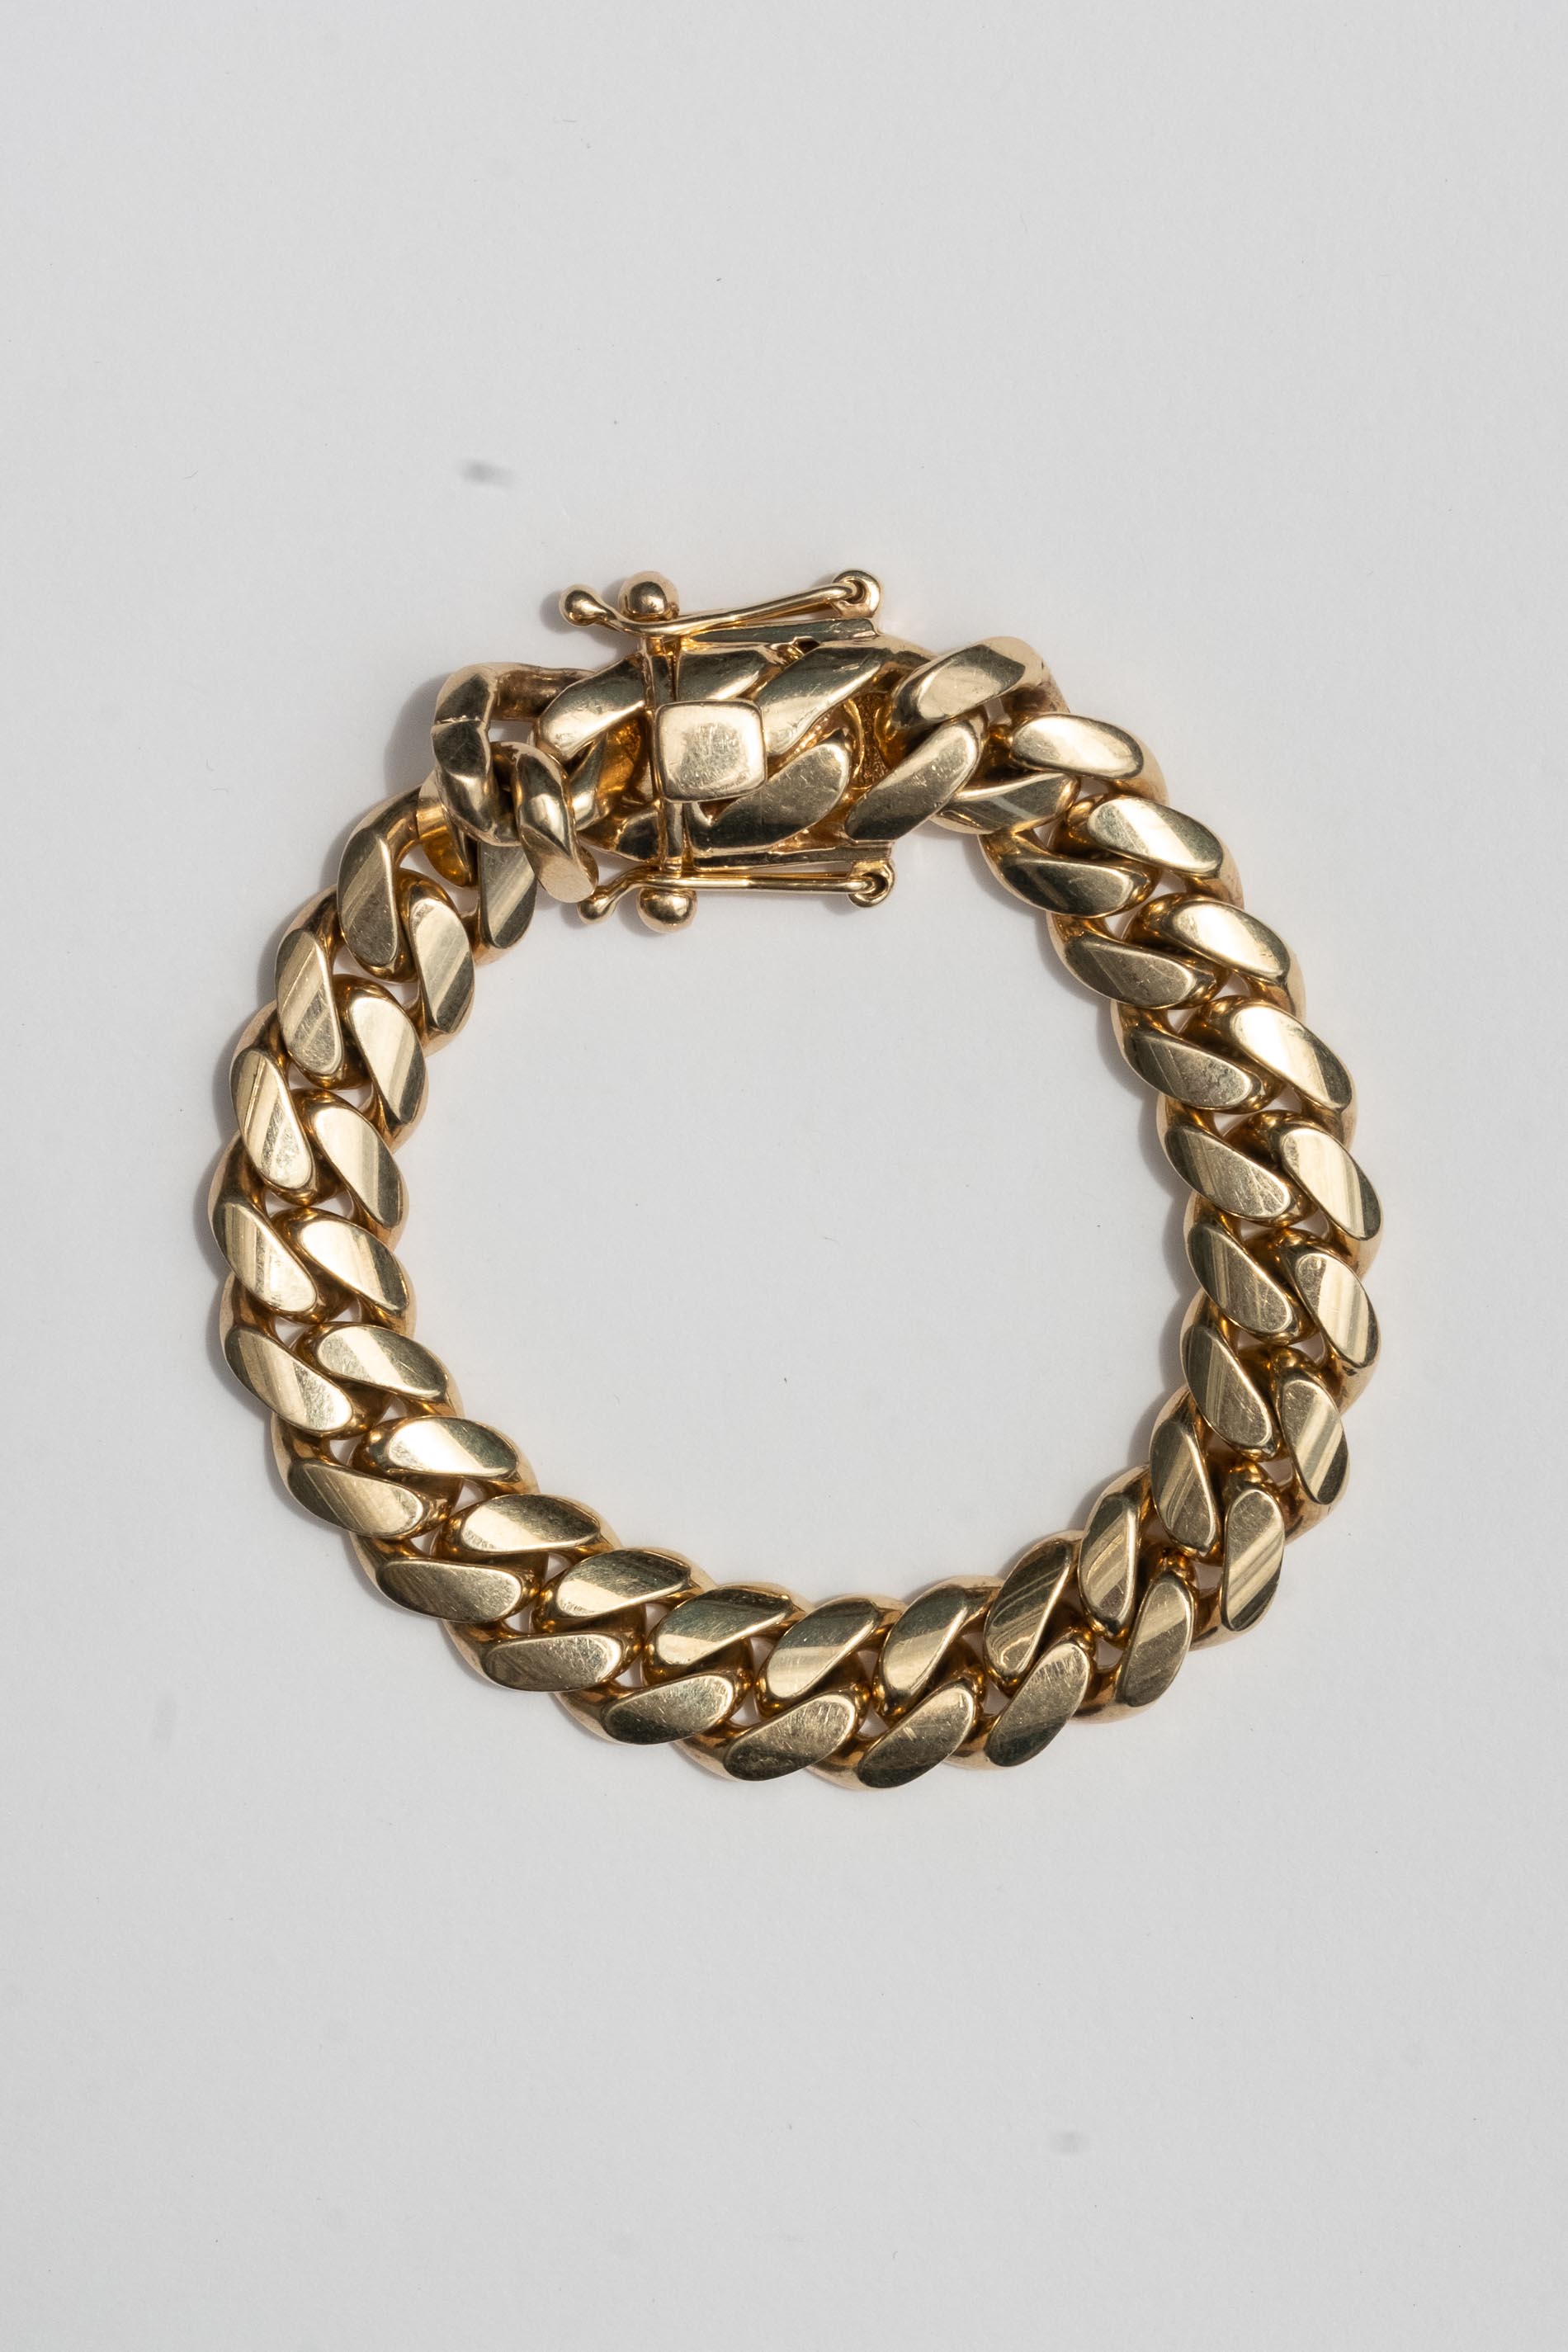 10K Solid Yellow Gold Finish Royal Miami Cuban Link Bracelet 7 inch For  Unisex | eBay